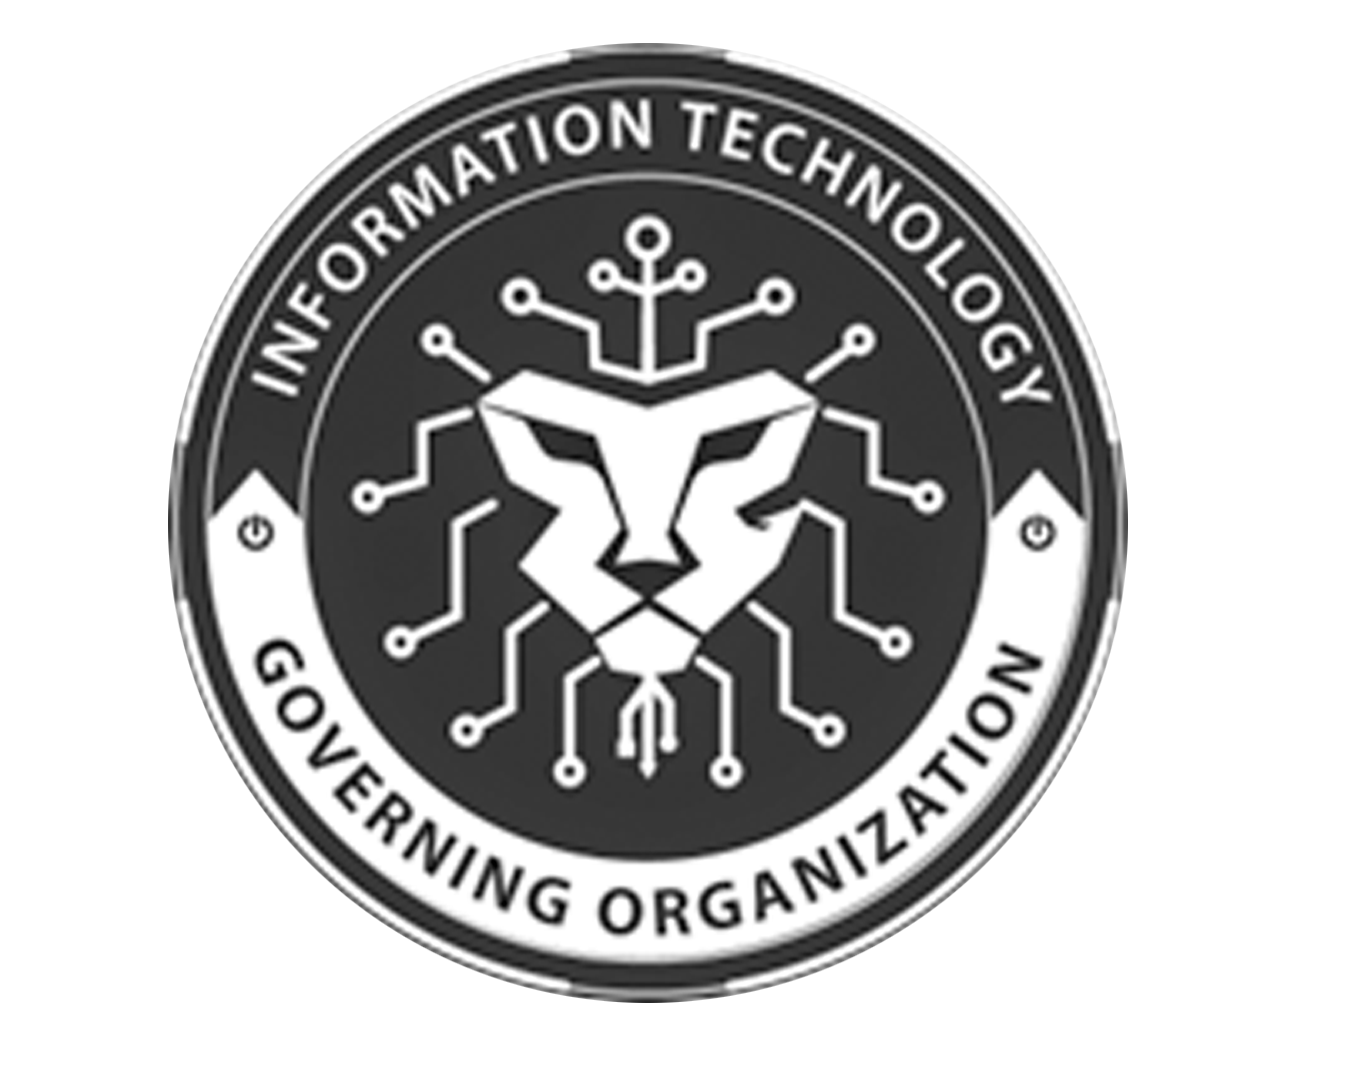 INFORMATION TECHNOLOGY GOVERNING ORGANIZATION